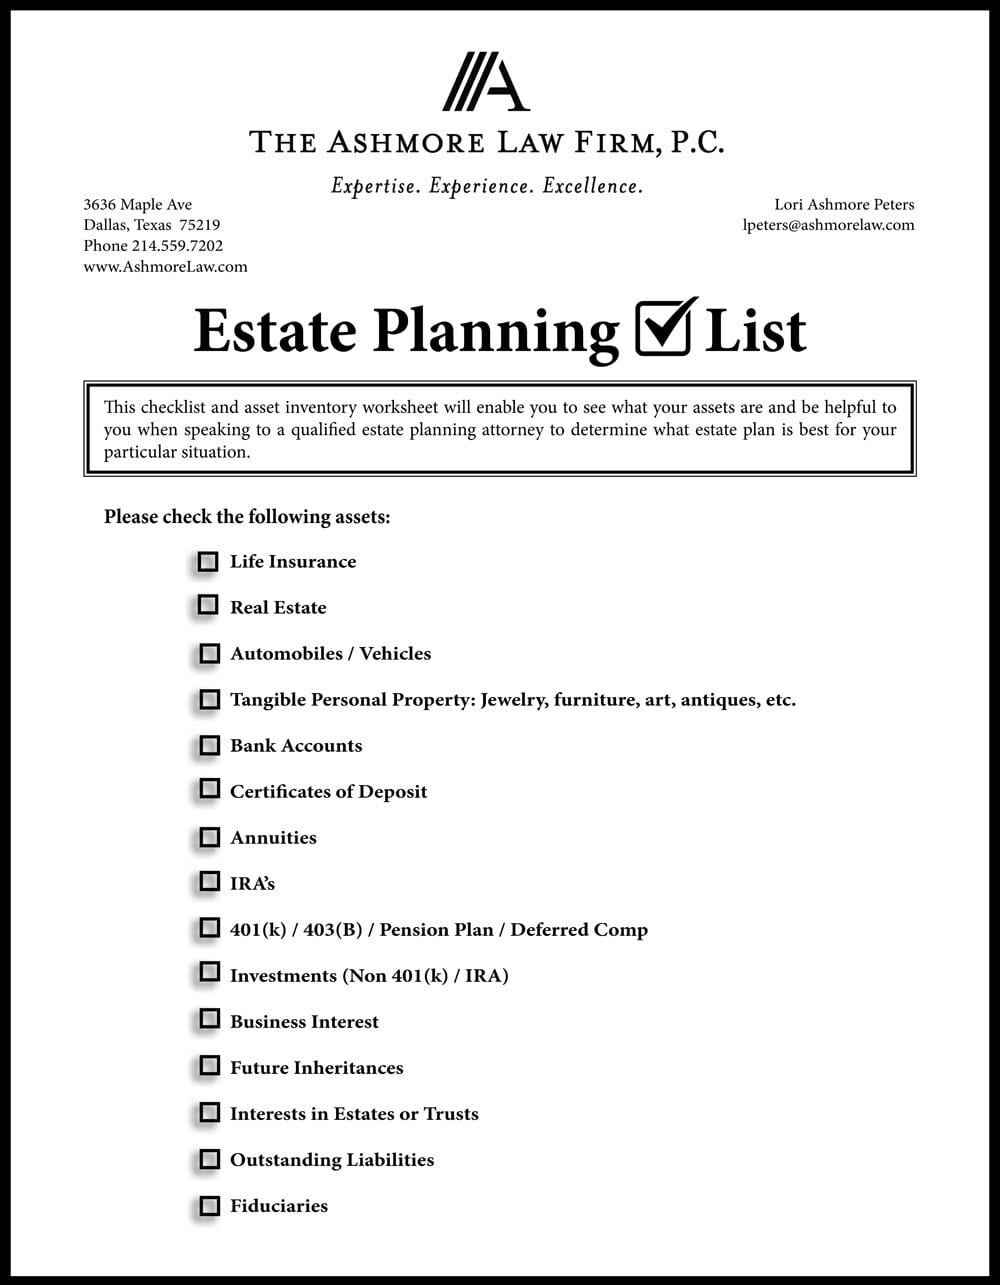 Estate Planning Checklist And Asset Inventory Worksheet  The For Estate Planning Worksheet Pdf